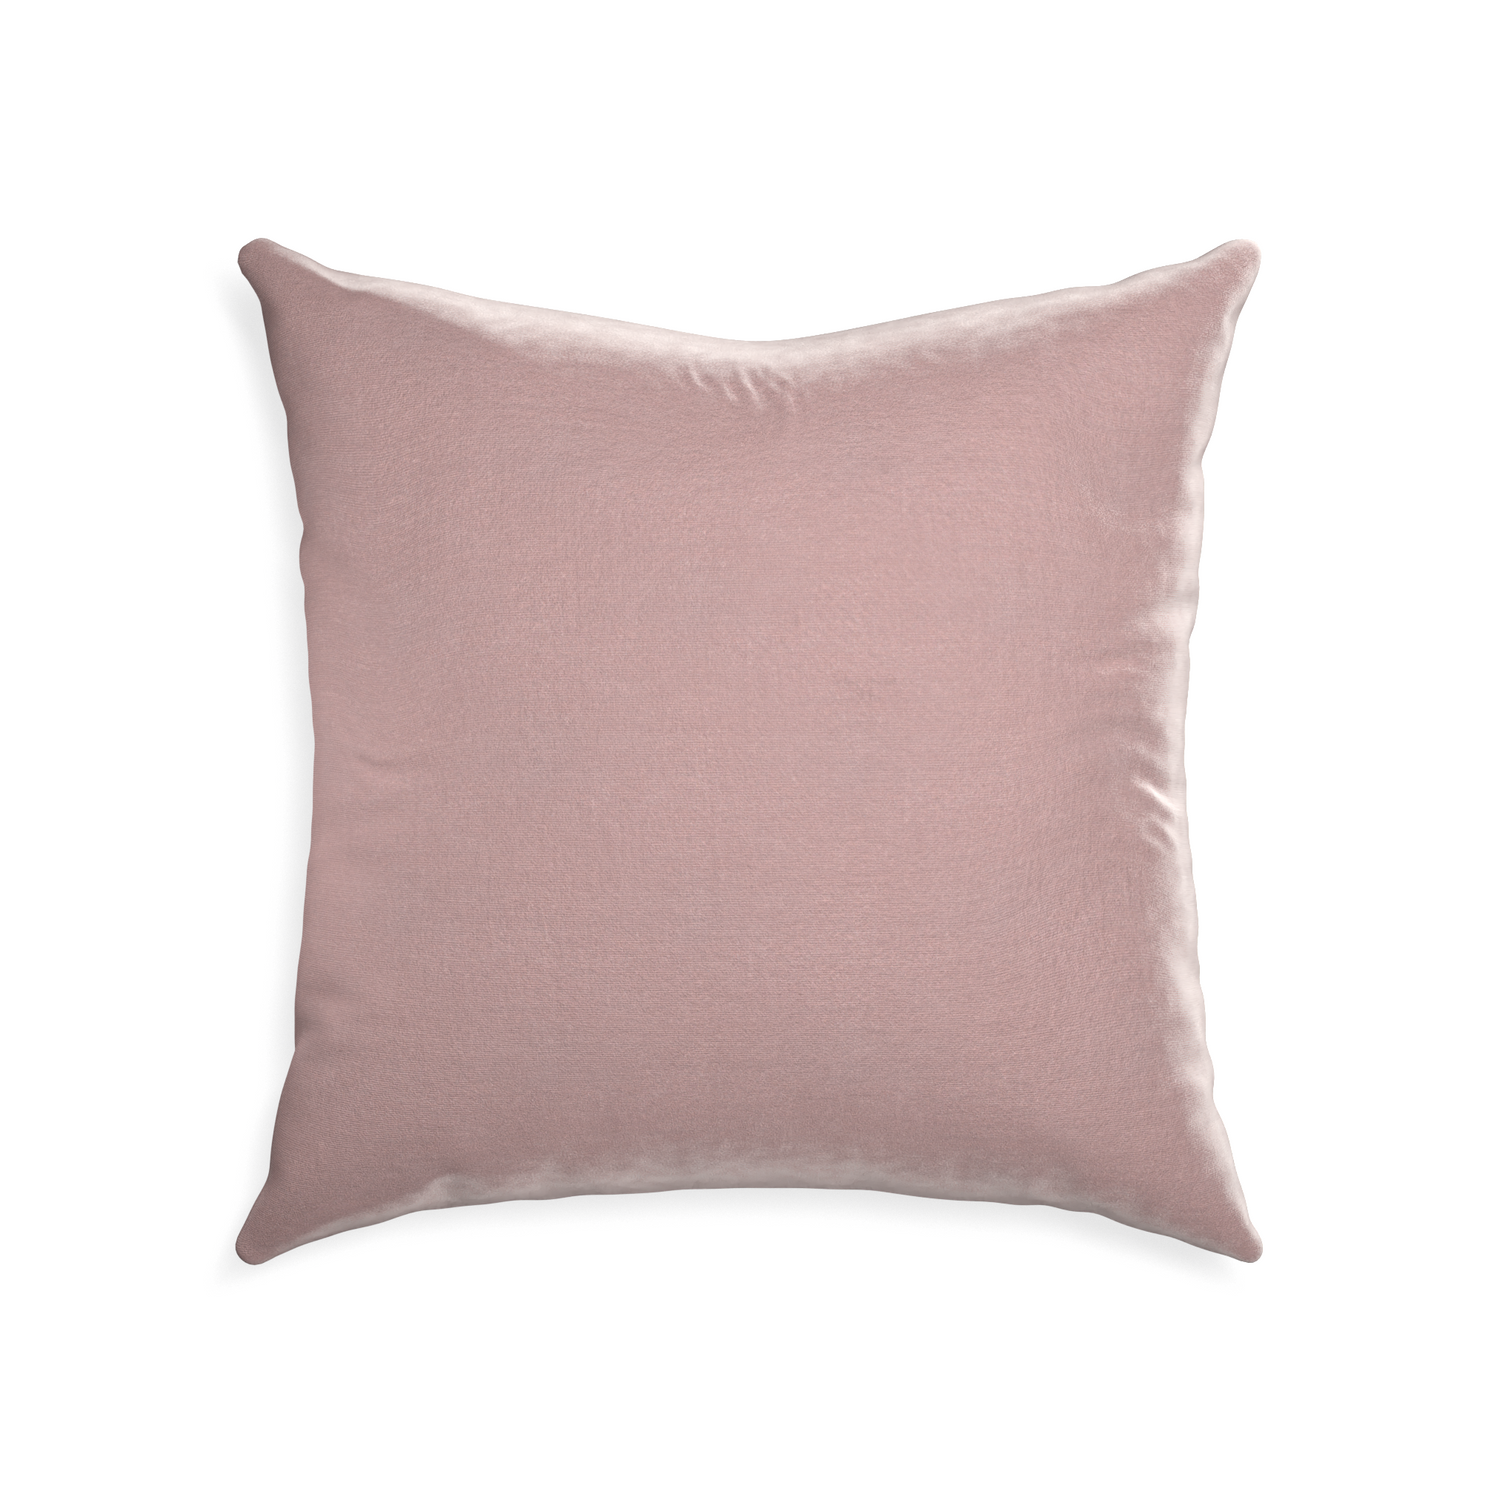 22-square mauve velvet custom pillow with none on white background